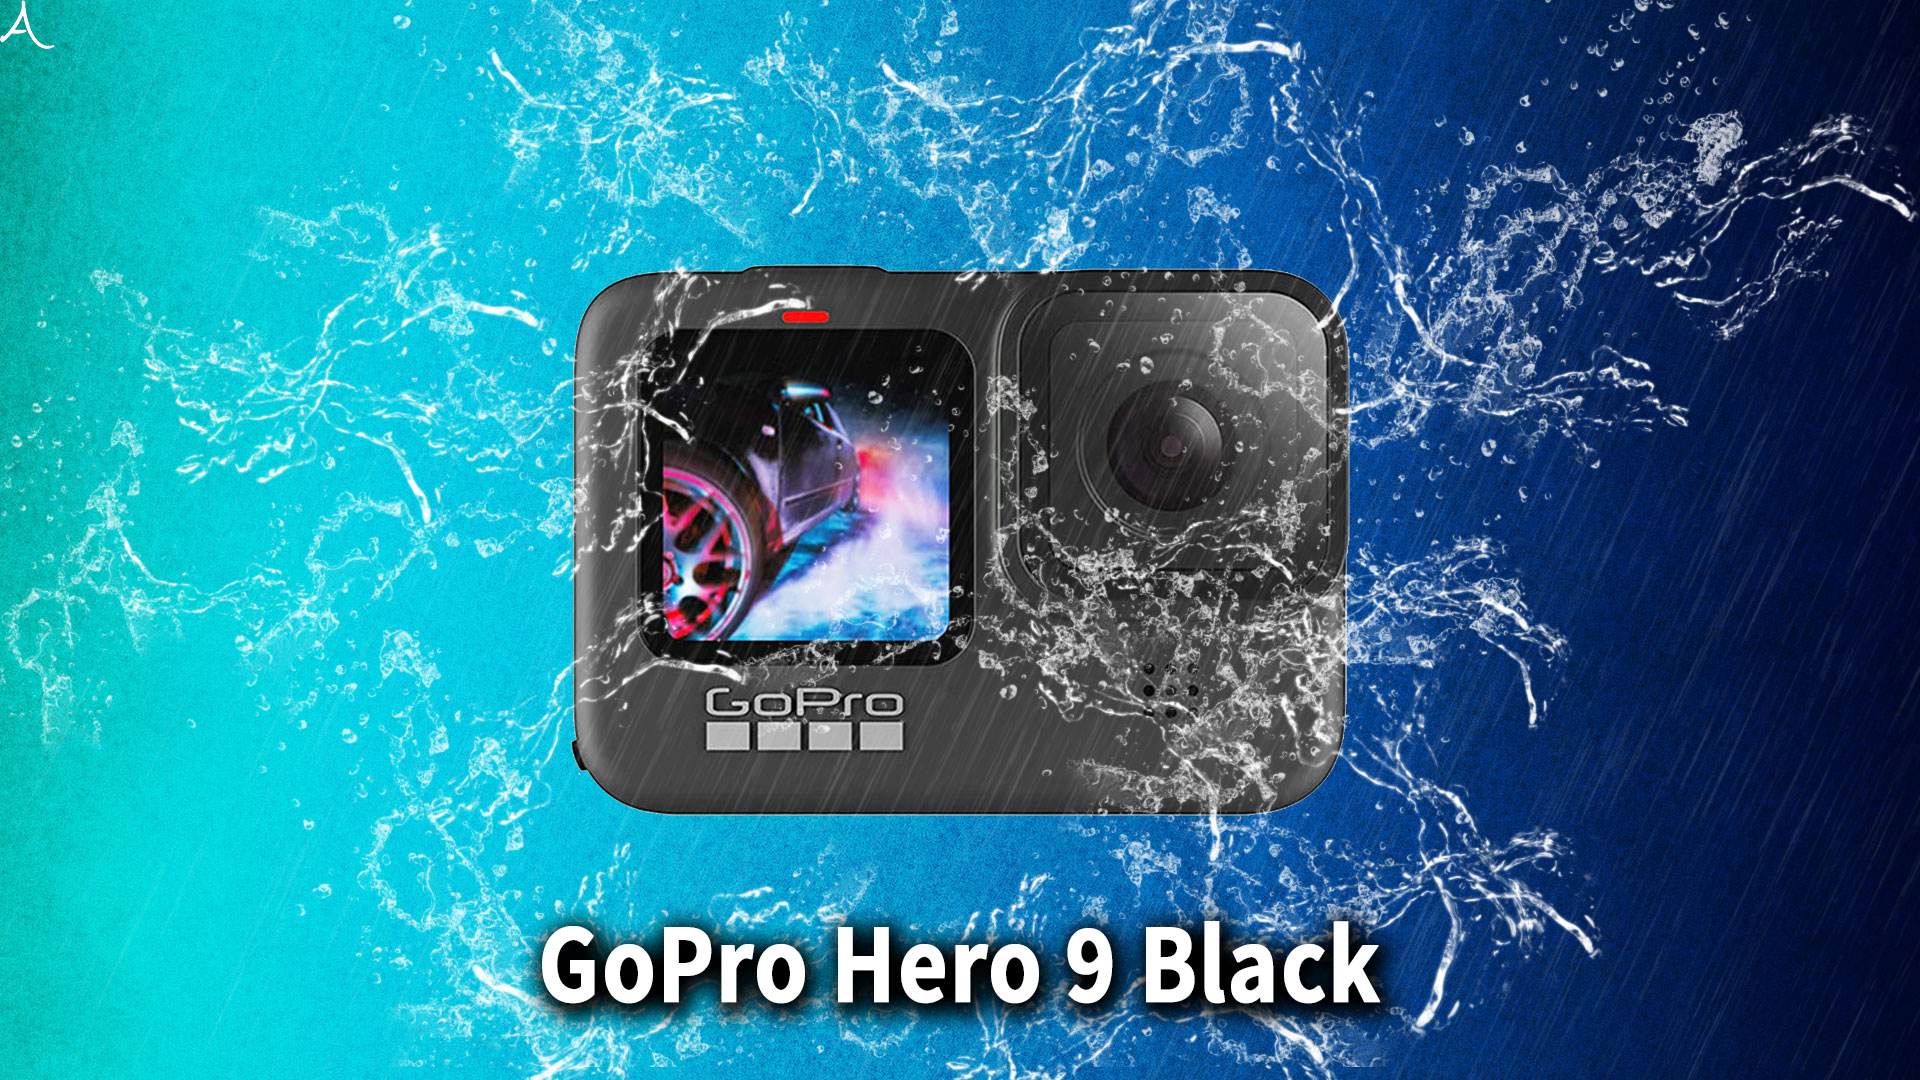 ｢GoPro Hero 9 Black｣のバッテリー持ちはどれくらい？互換性のあるおすすめのバッテリーはコレ！